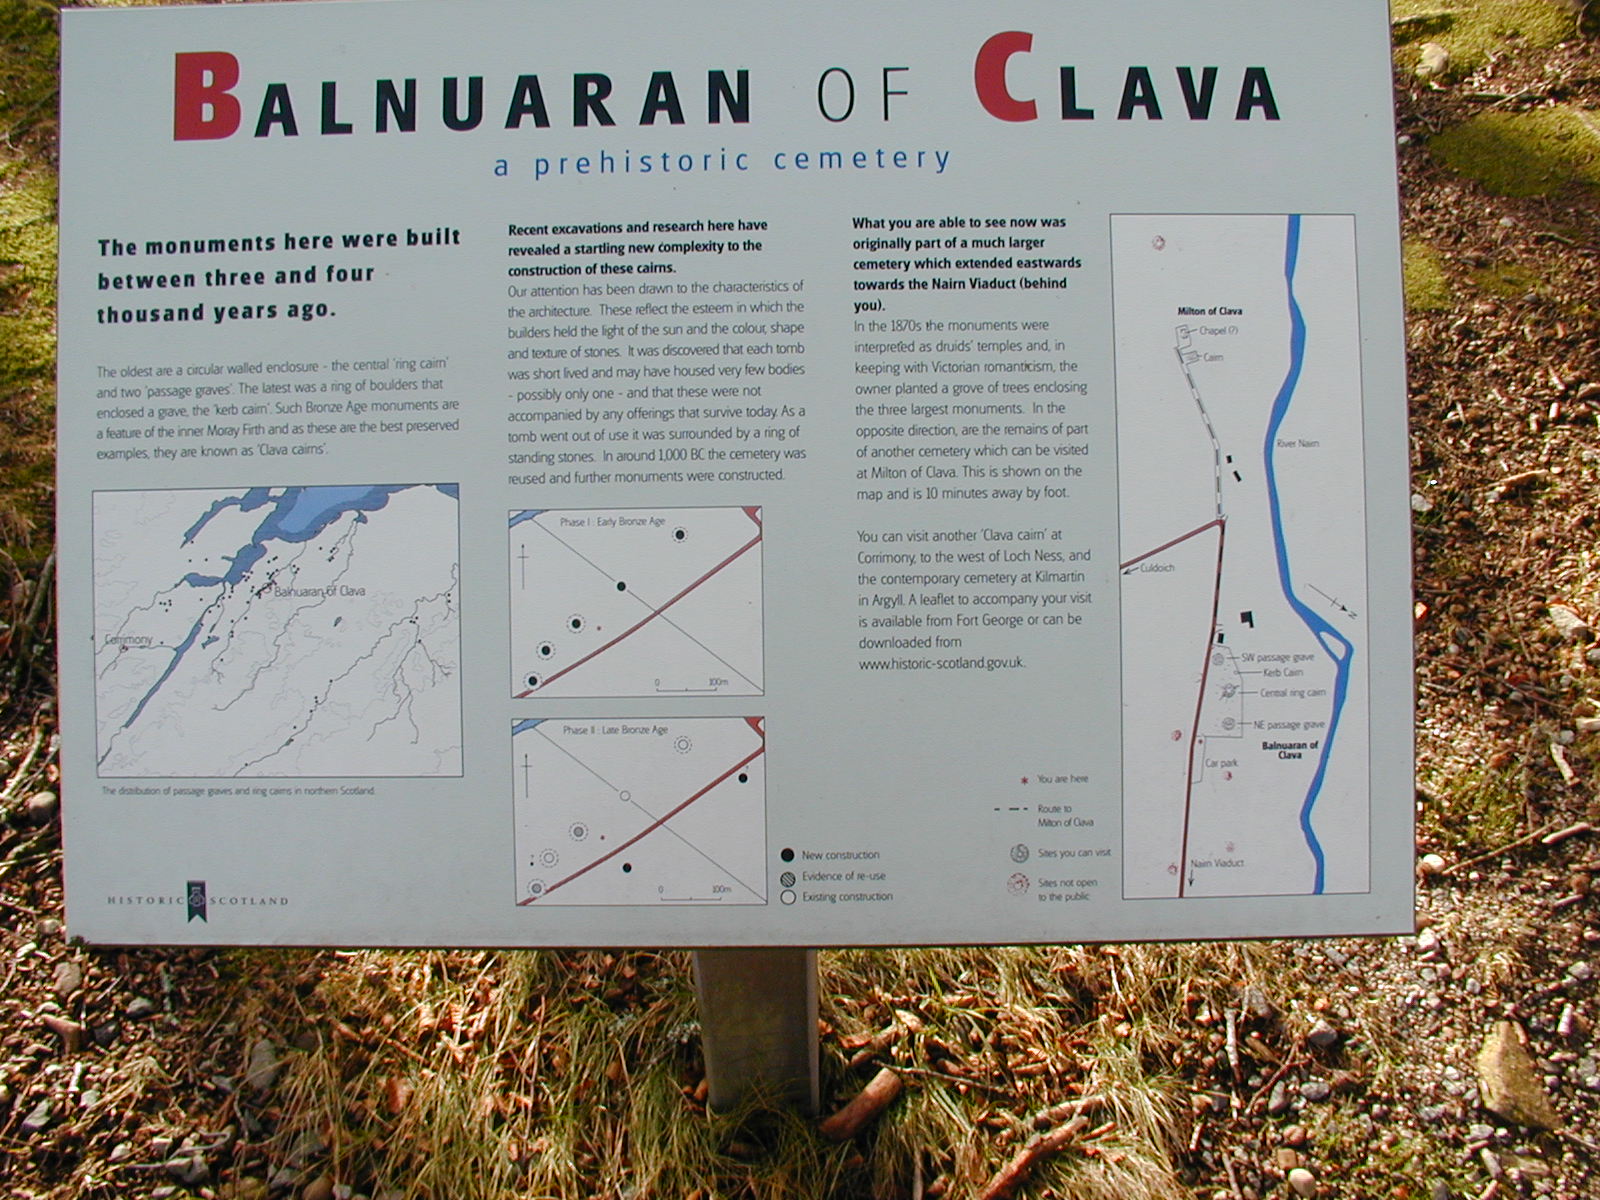 BALNUARAN OF CLAVA